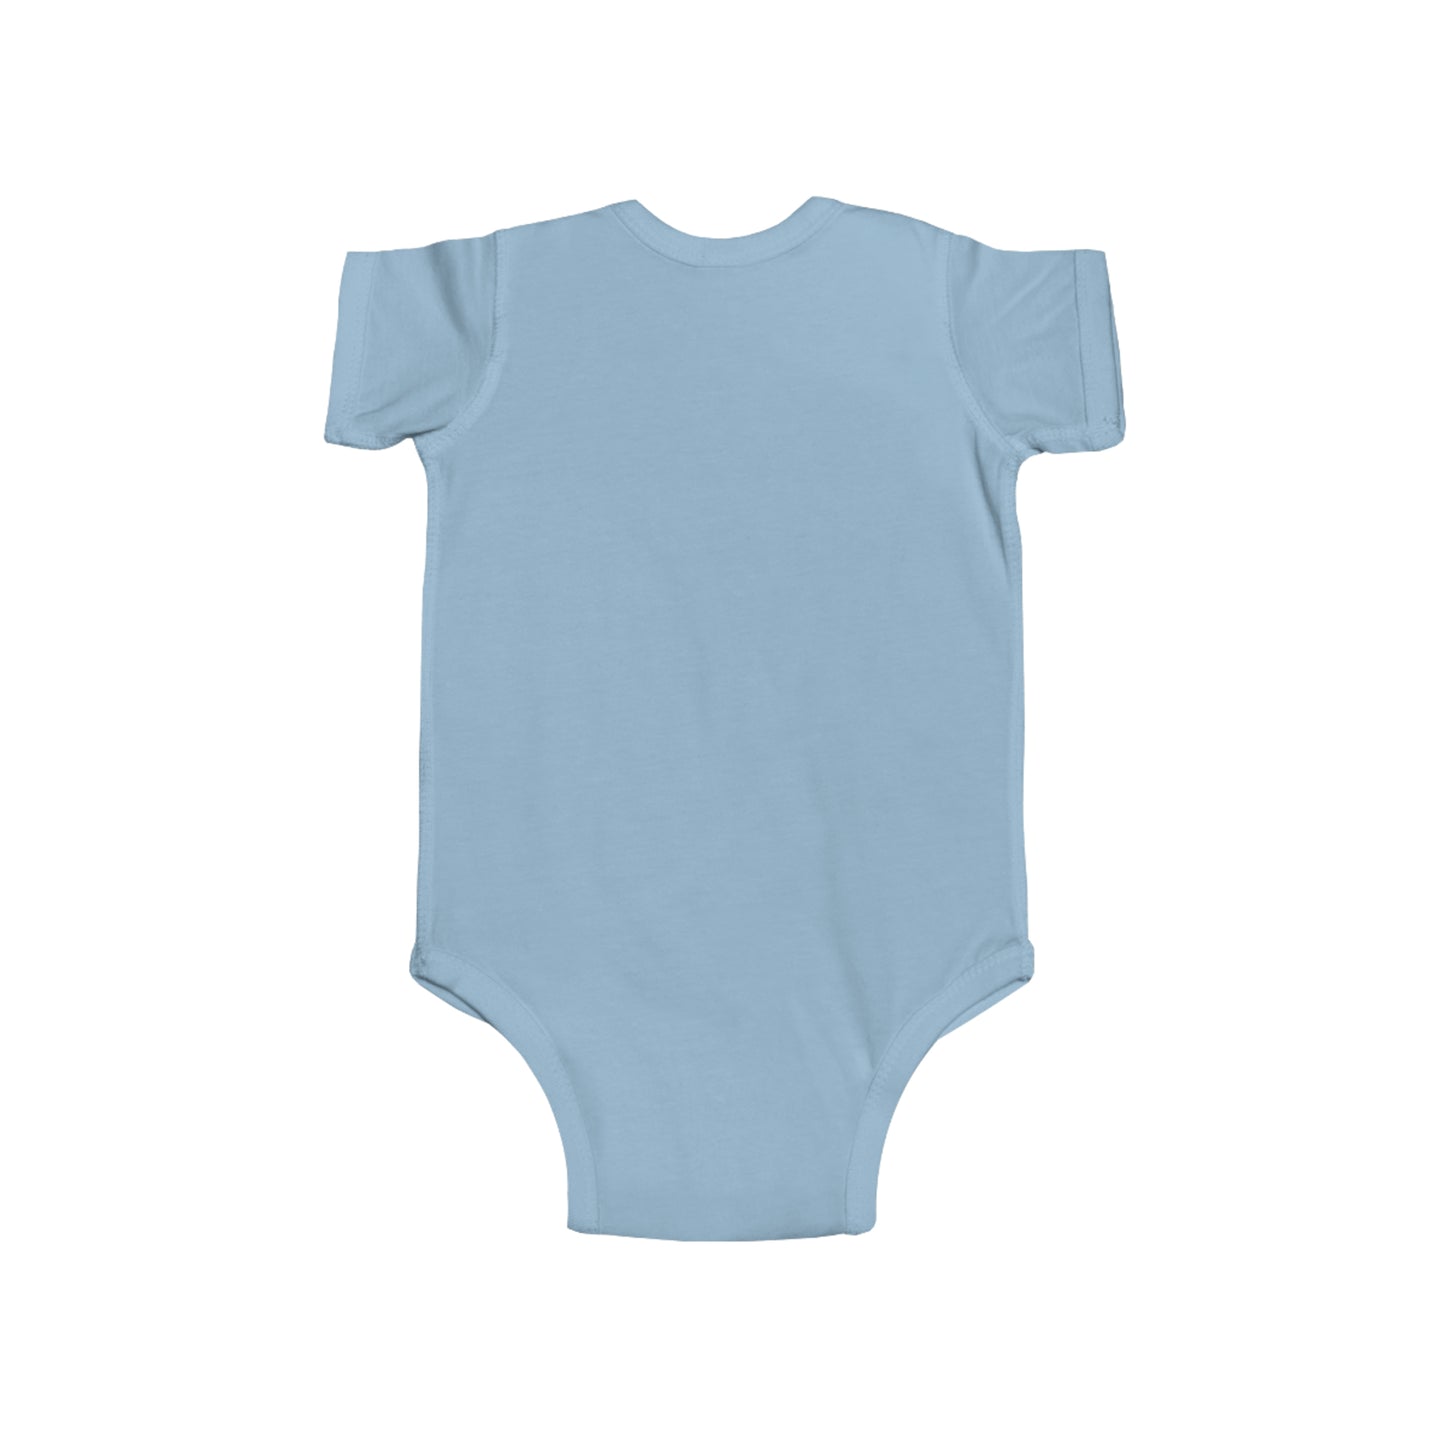 HLGU WILKSILHXW - LITTLE PRINCE/PRINCESS, CHILD OF A CHIEF - Infant Jersey Bodysuit